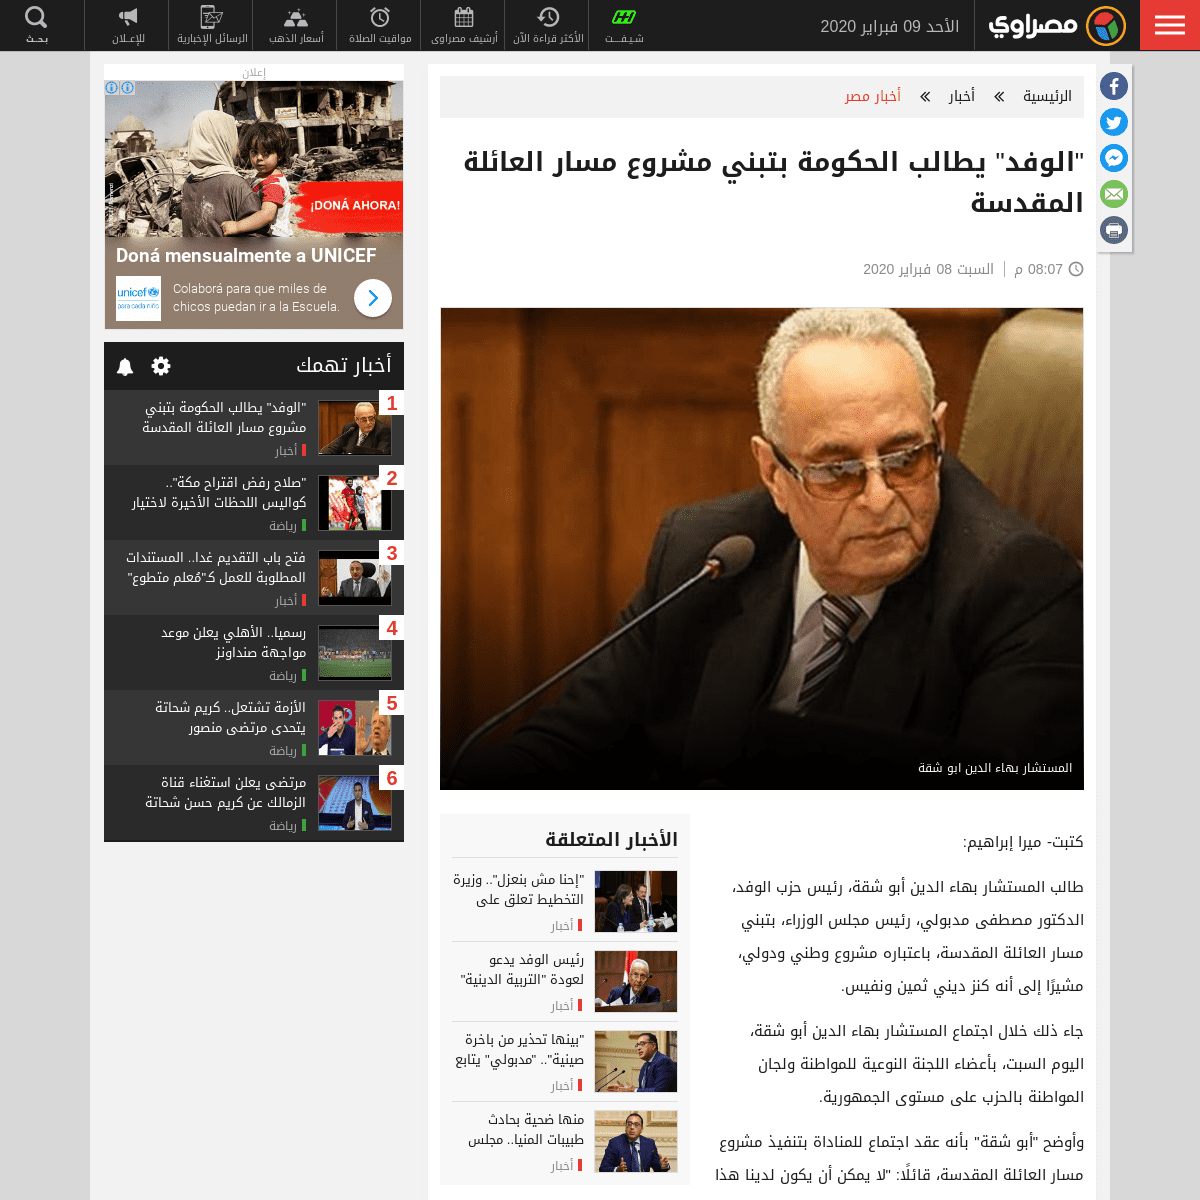 A complete backup of www.masrawy.com/news/news_egypt/details/2020/2/8/1720488/-%D8%A7%D9%84%D9%88%D9%81%D8%AF-%D9%8A%D8%B7%D8%A7